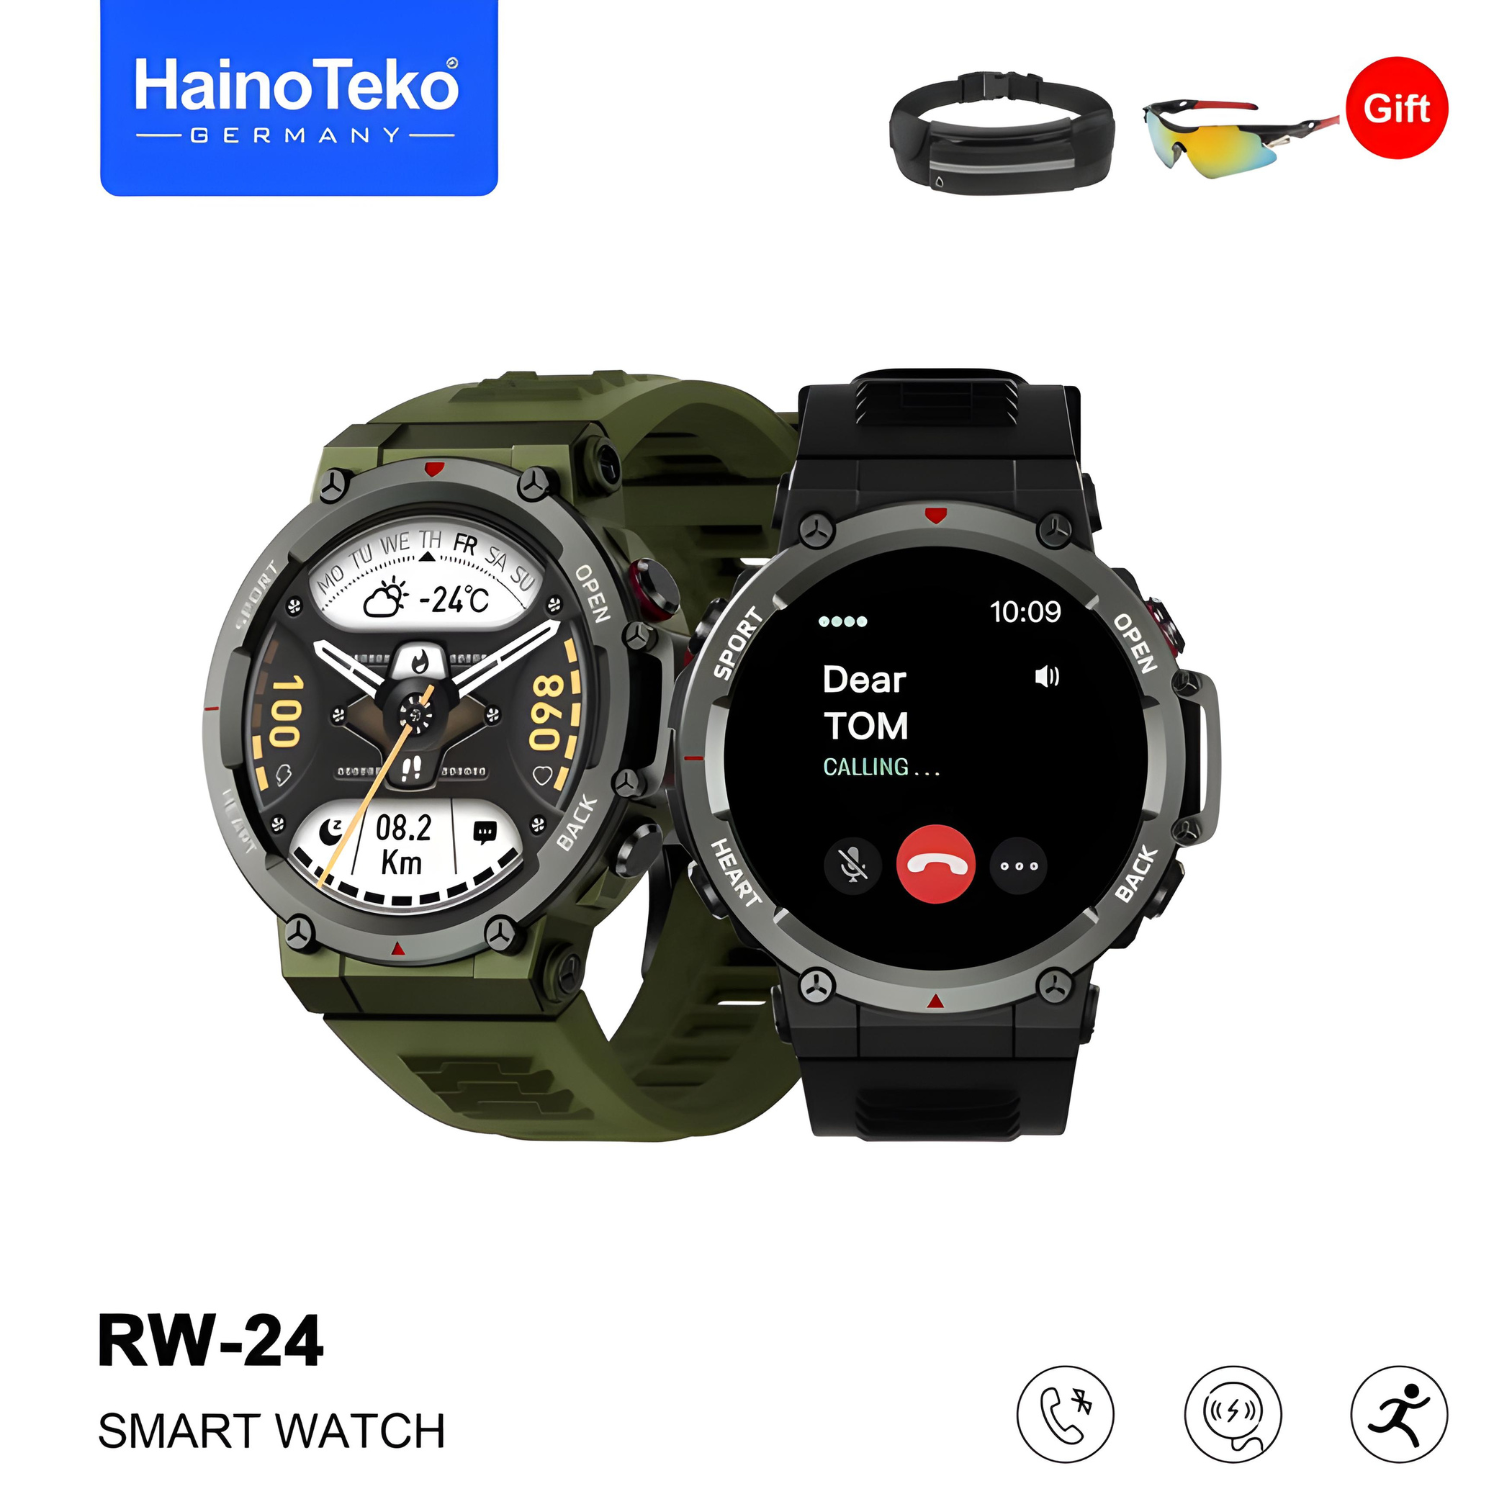 Haino Teko Germany RW24 Premium Smart Watch - Real AMOLED Display, Men's Fitness Tracker, Health Monitor, Water Resistant